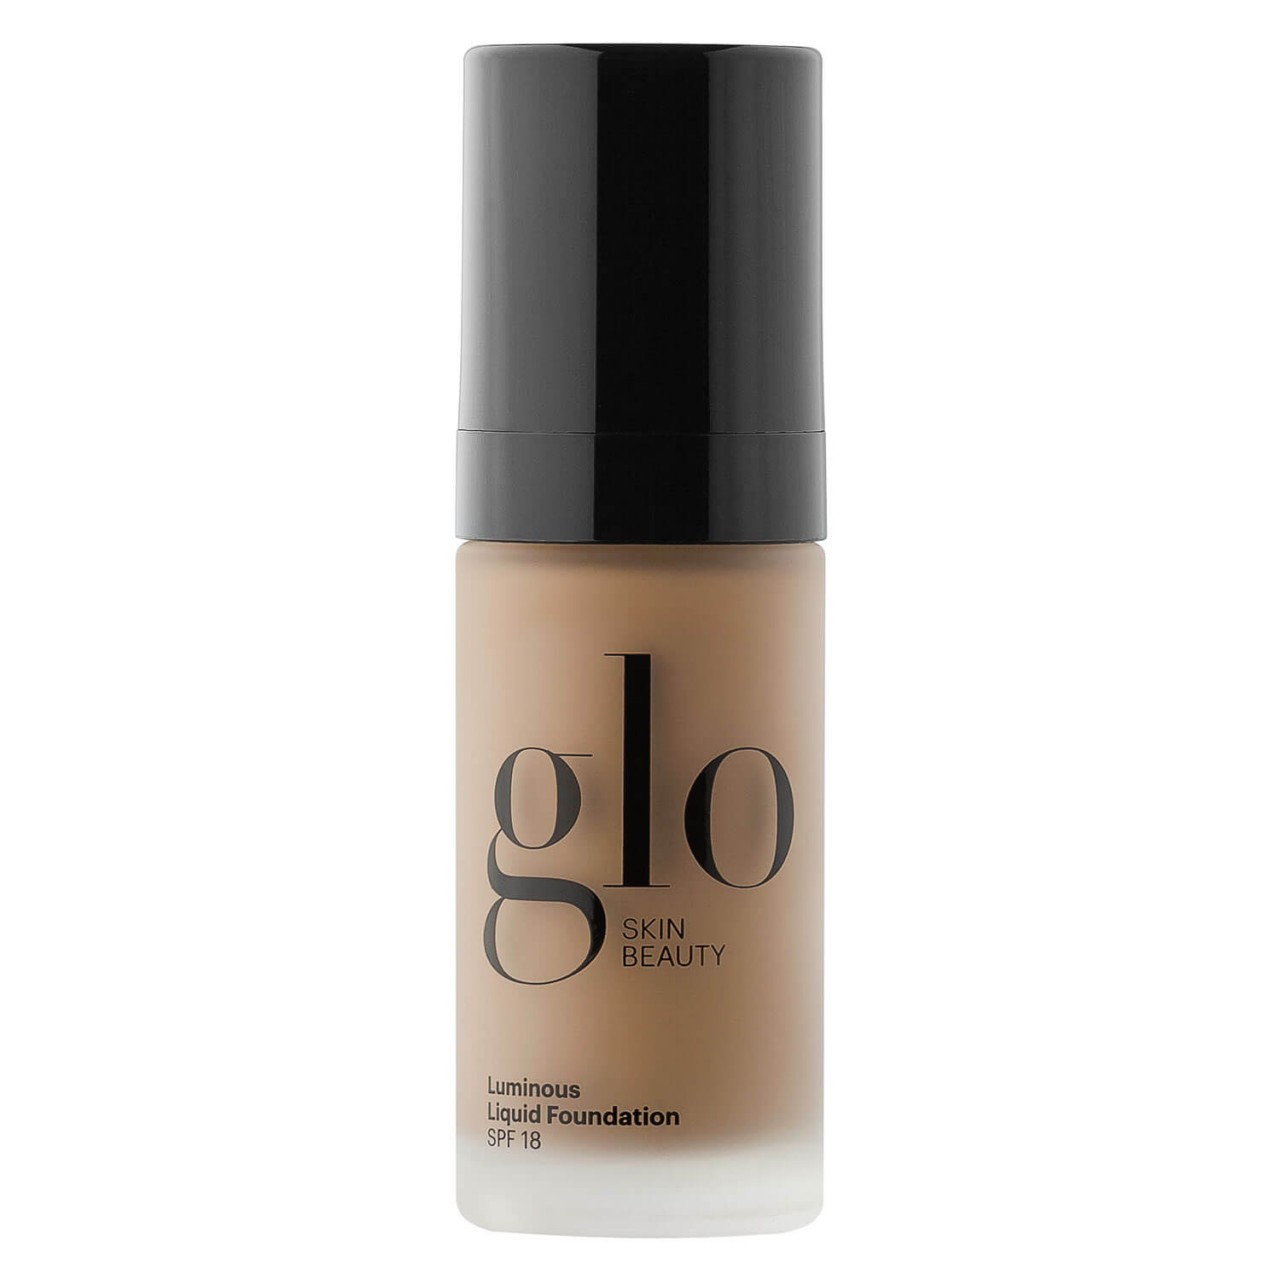 Glo Skin Beauty Foundation - Luminous Liquid Foundation Brûlée SPF 18 von Glo Skin Beauty